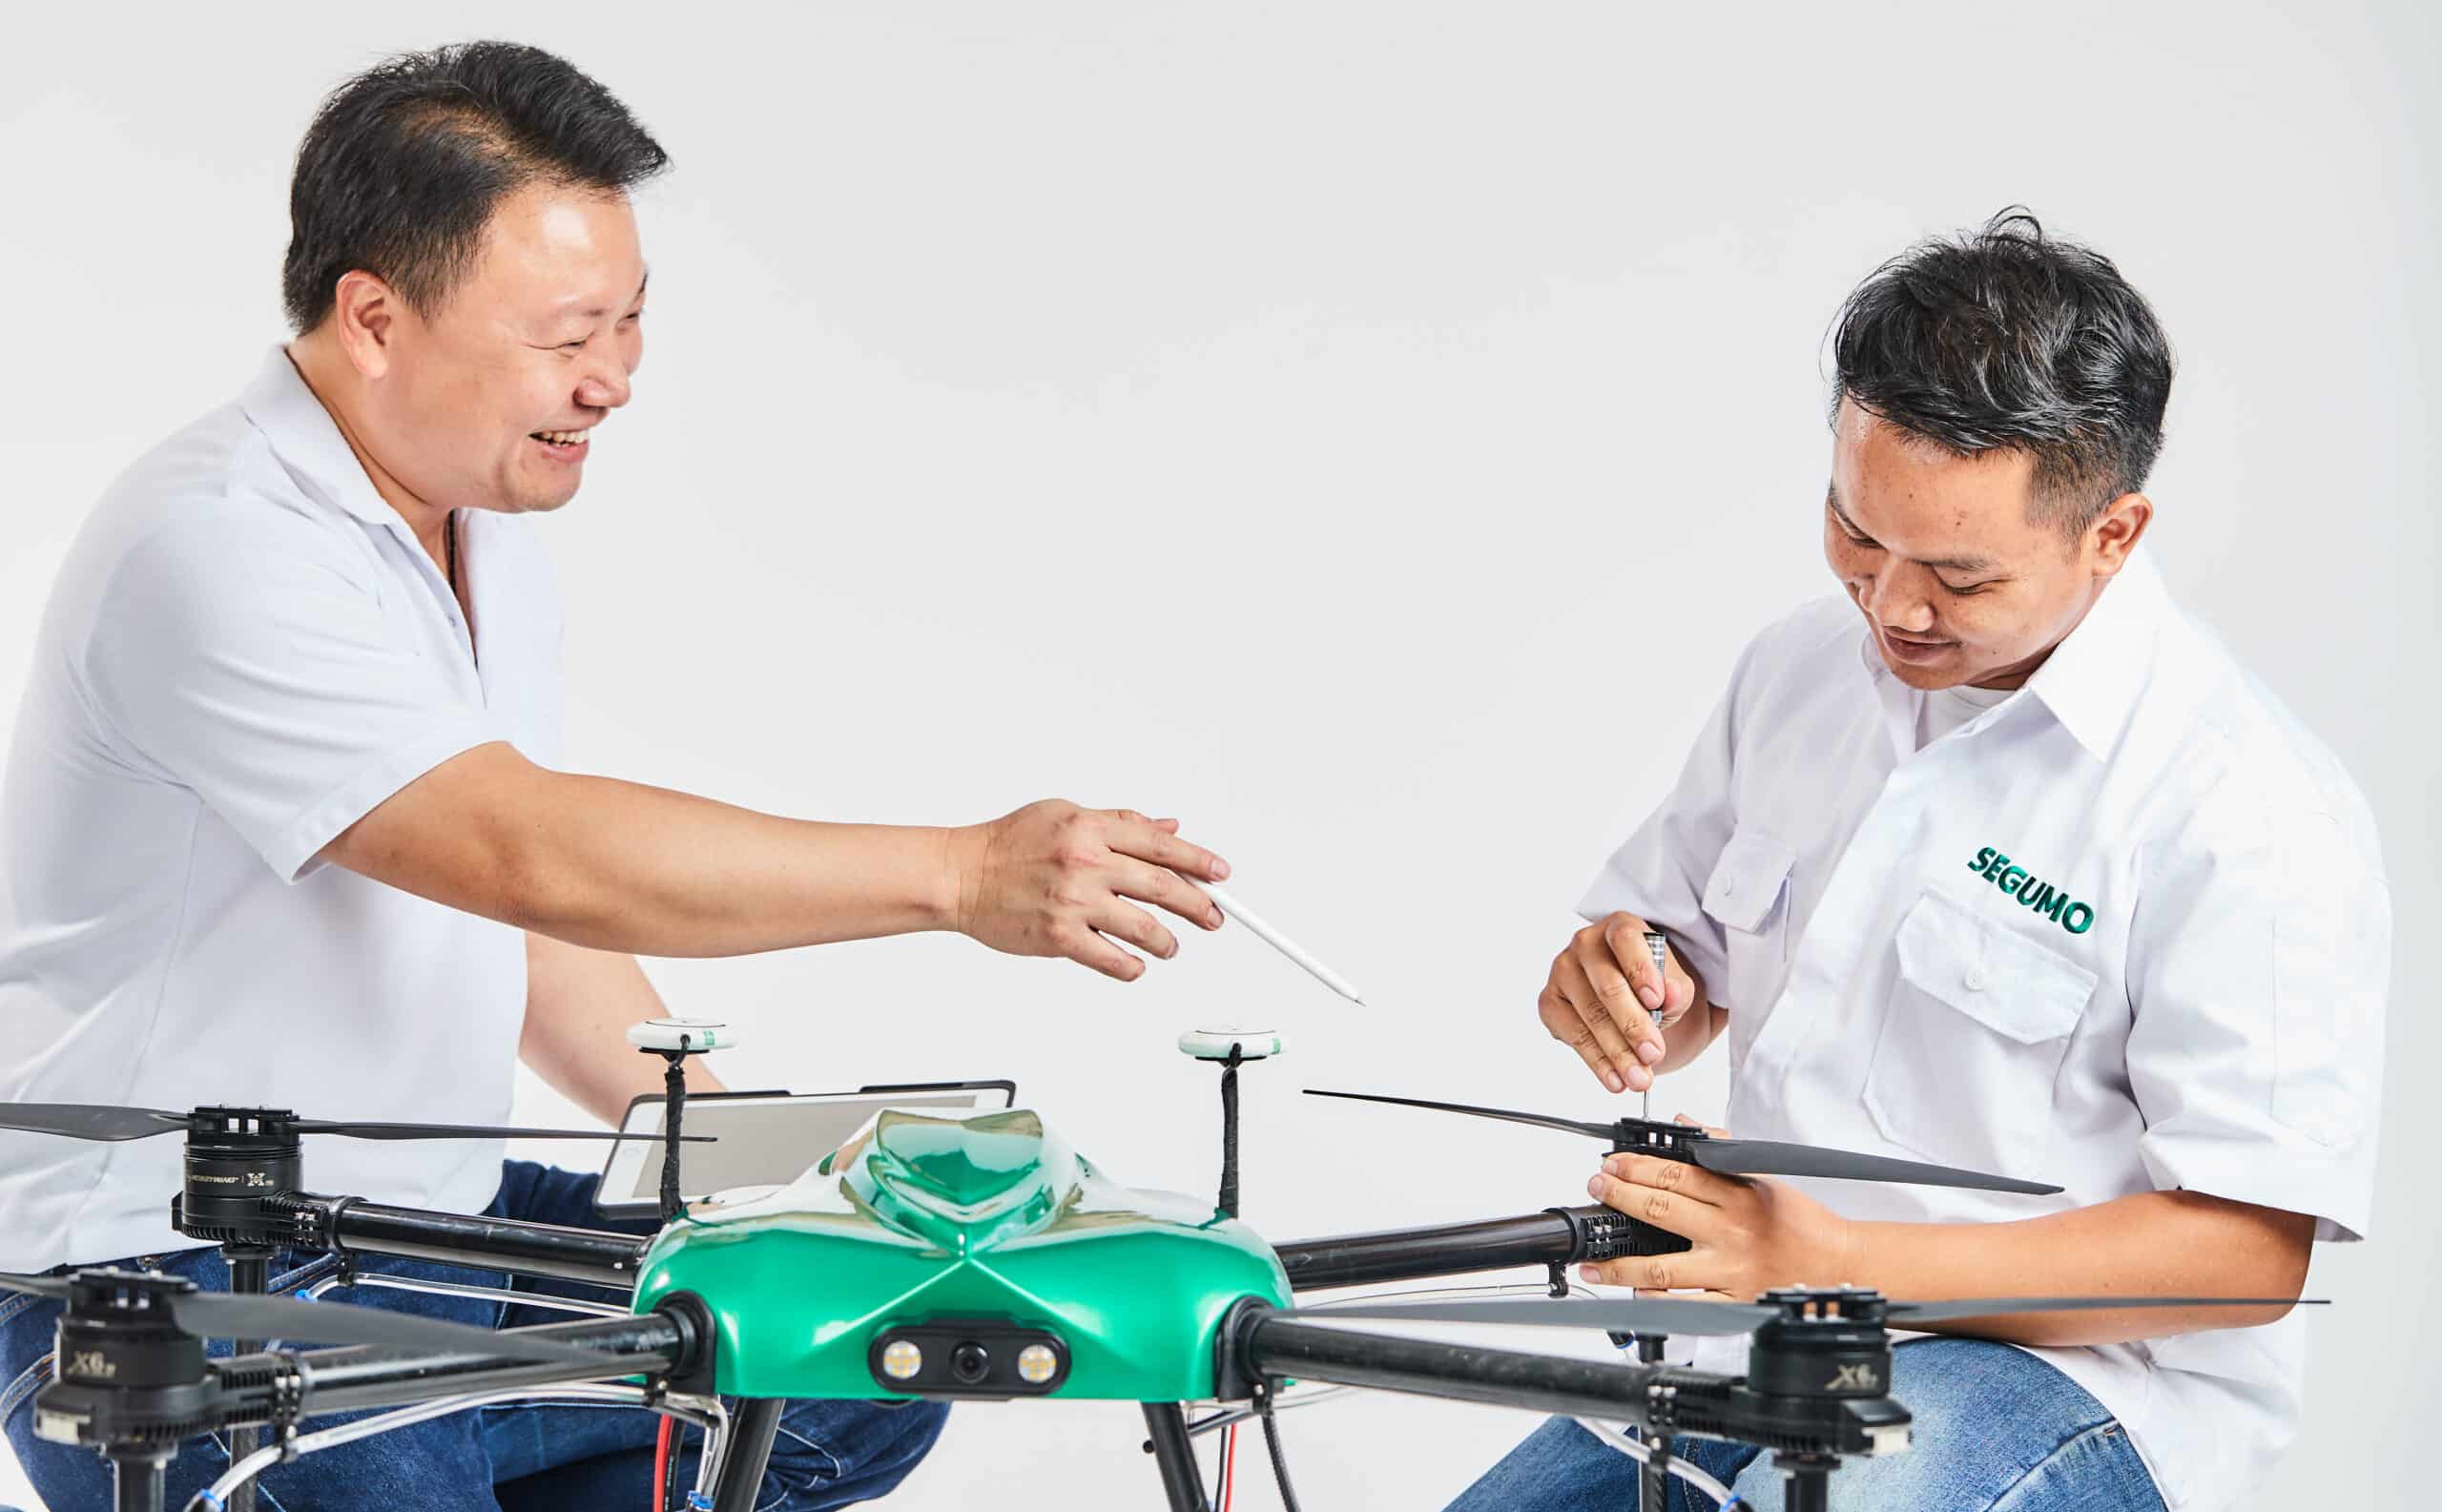 engineer-segumo-drone-thailand